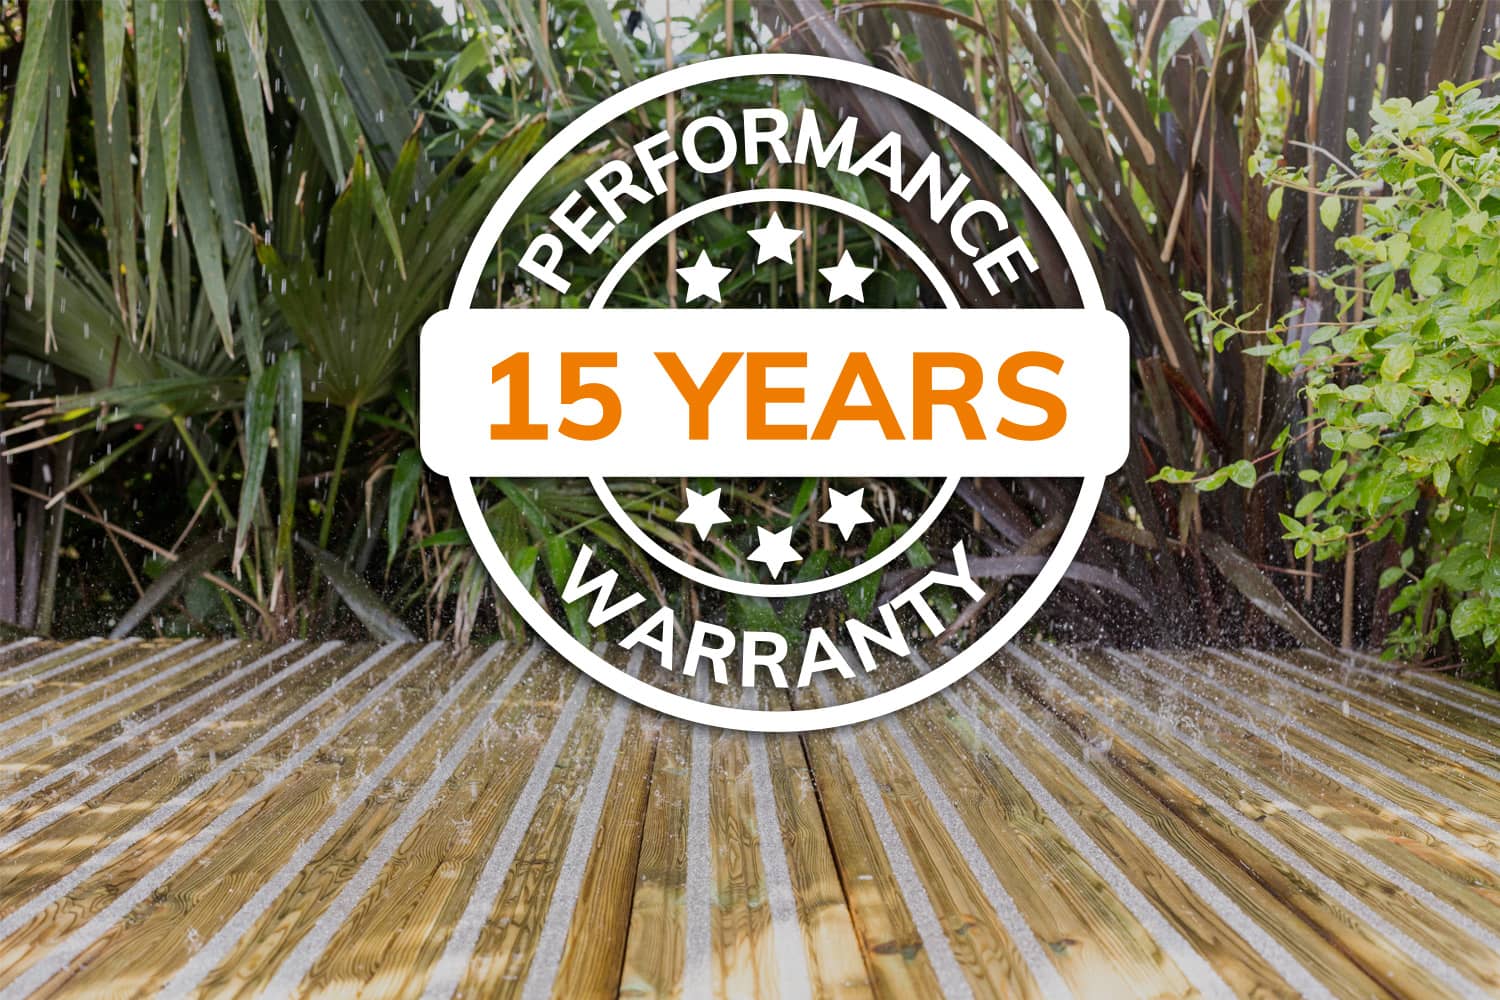 Gripsure 15 years performance warranty logo